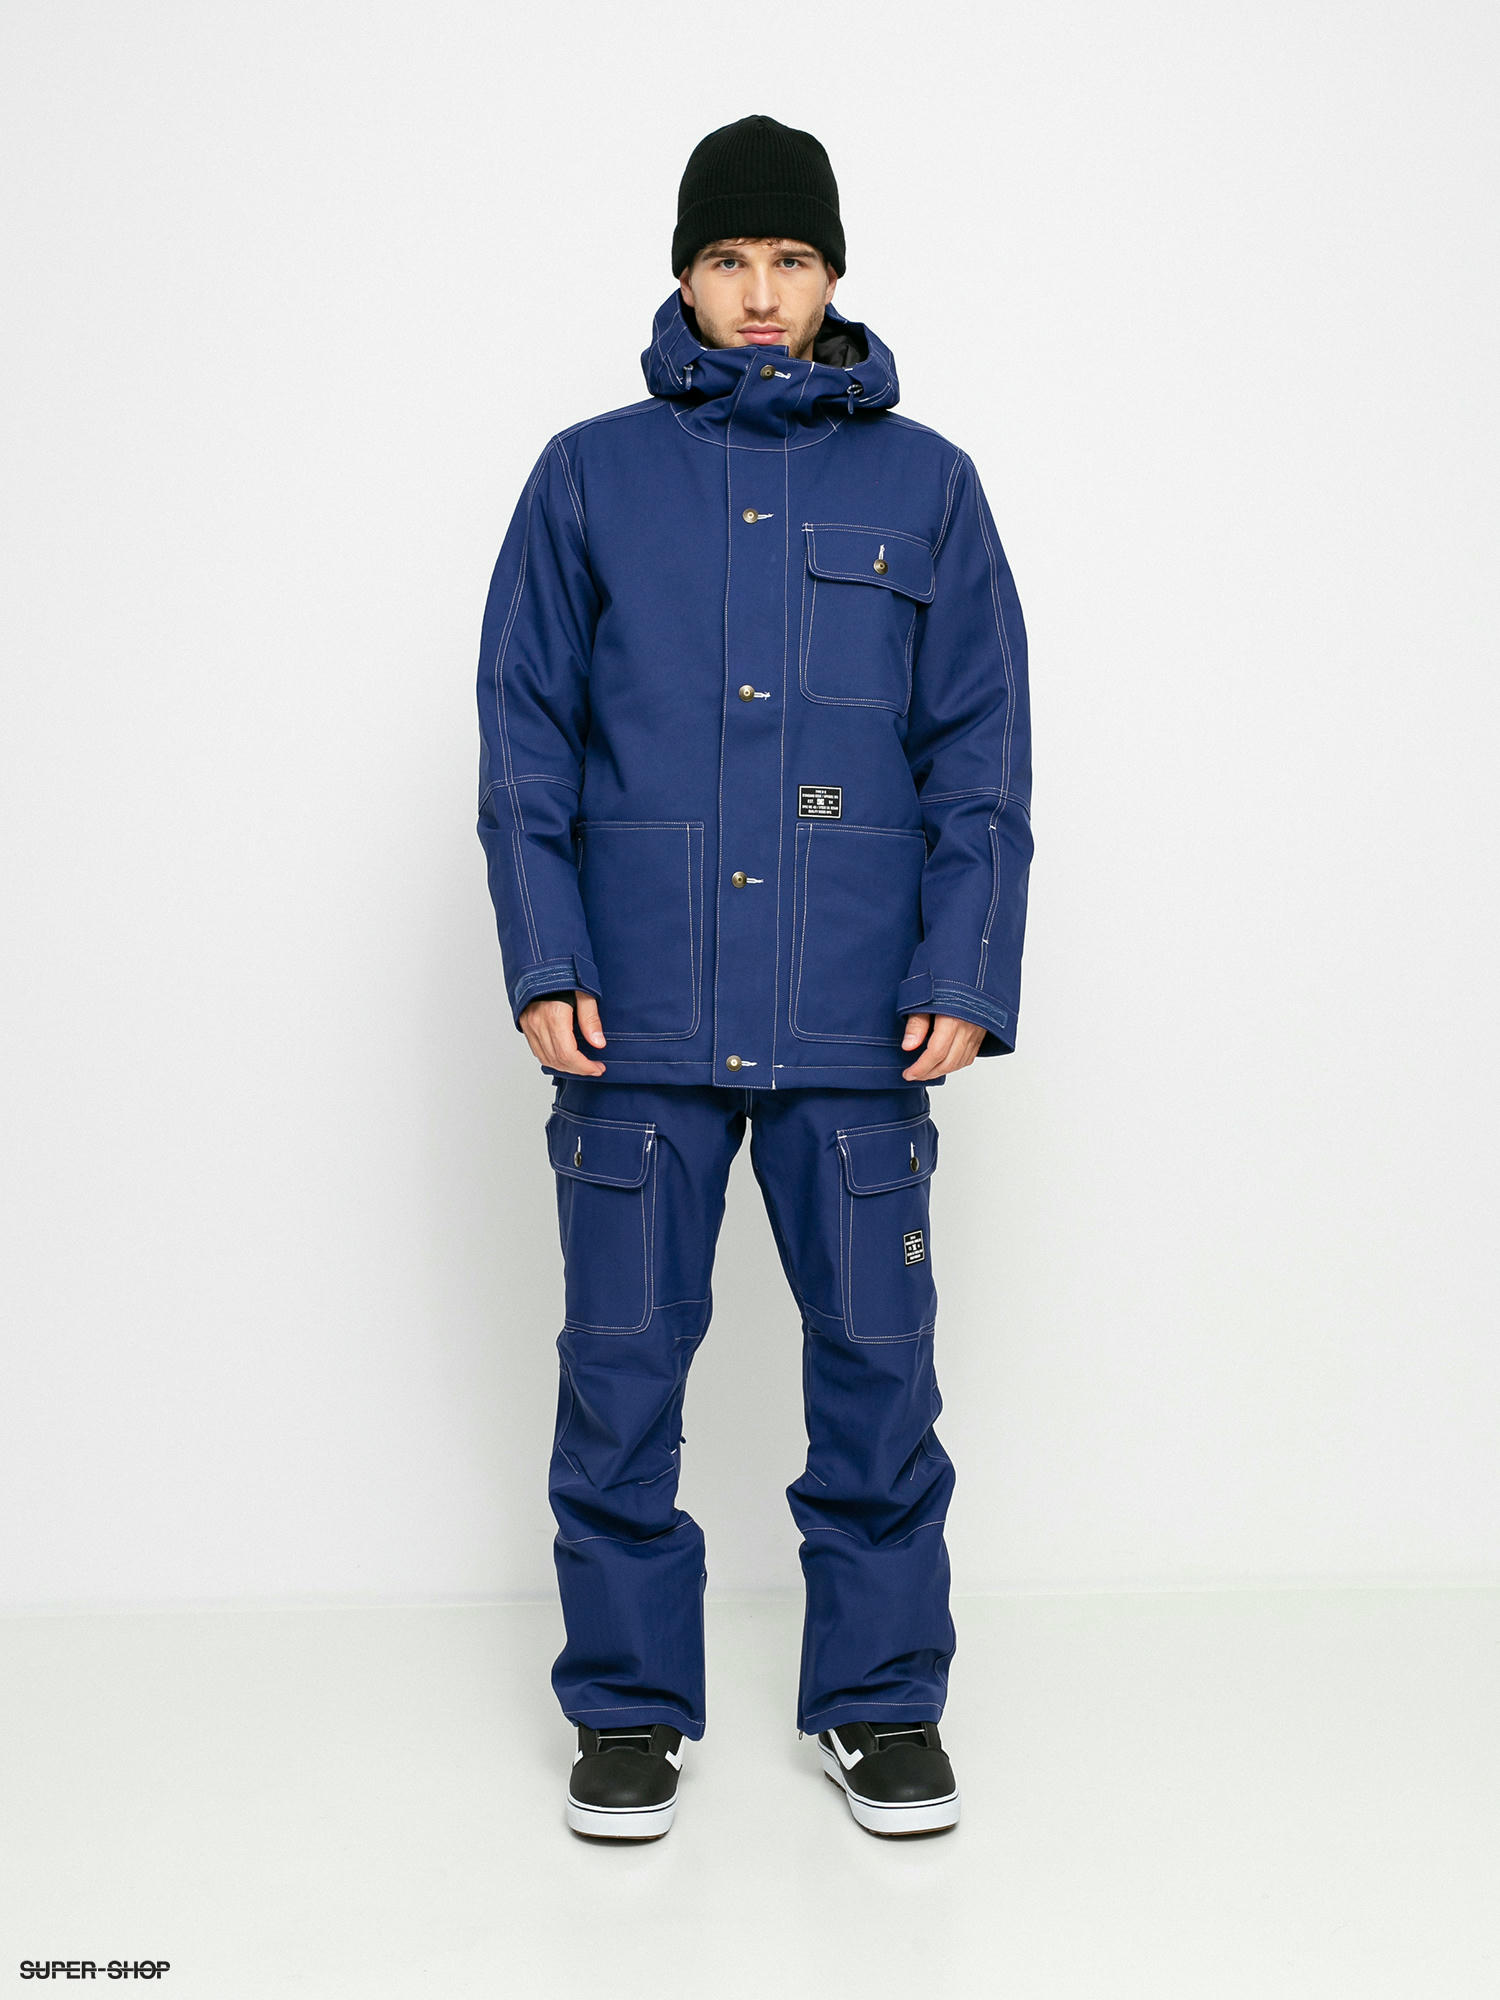 Mince wooden suffering DC Servo Snowboard jacket (blue print)